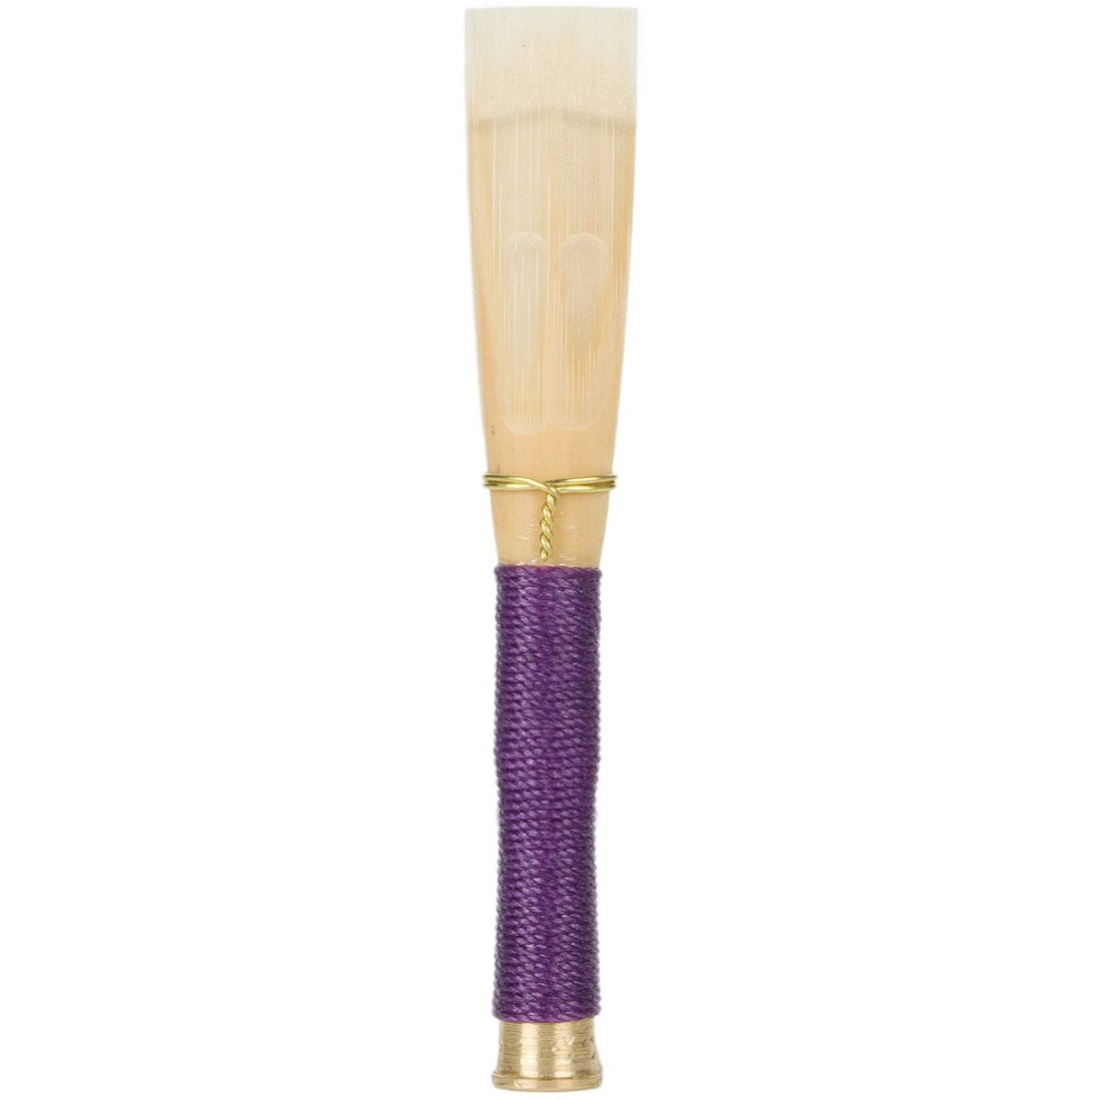 Jones English Horn reed, with purple threading